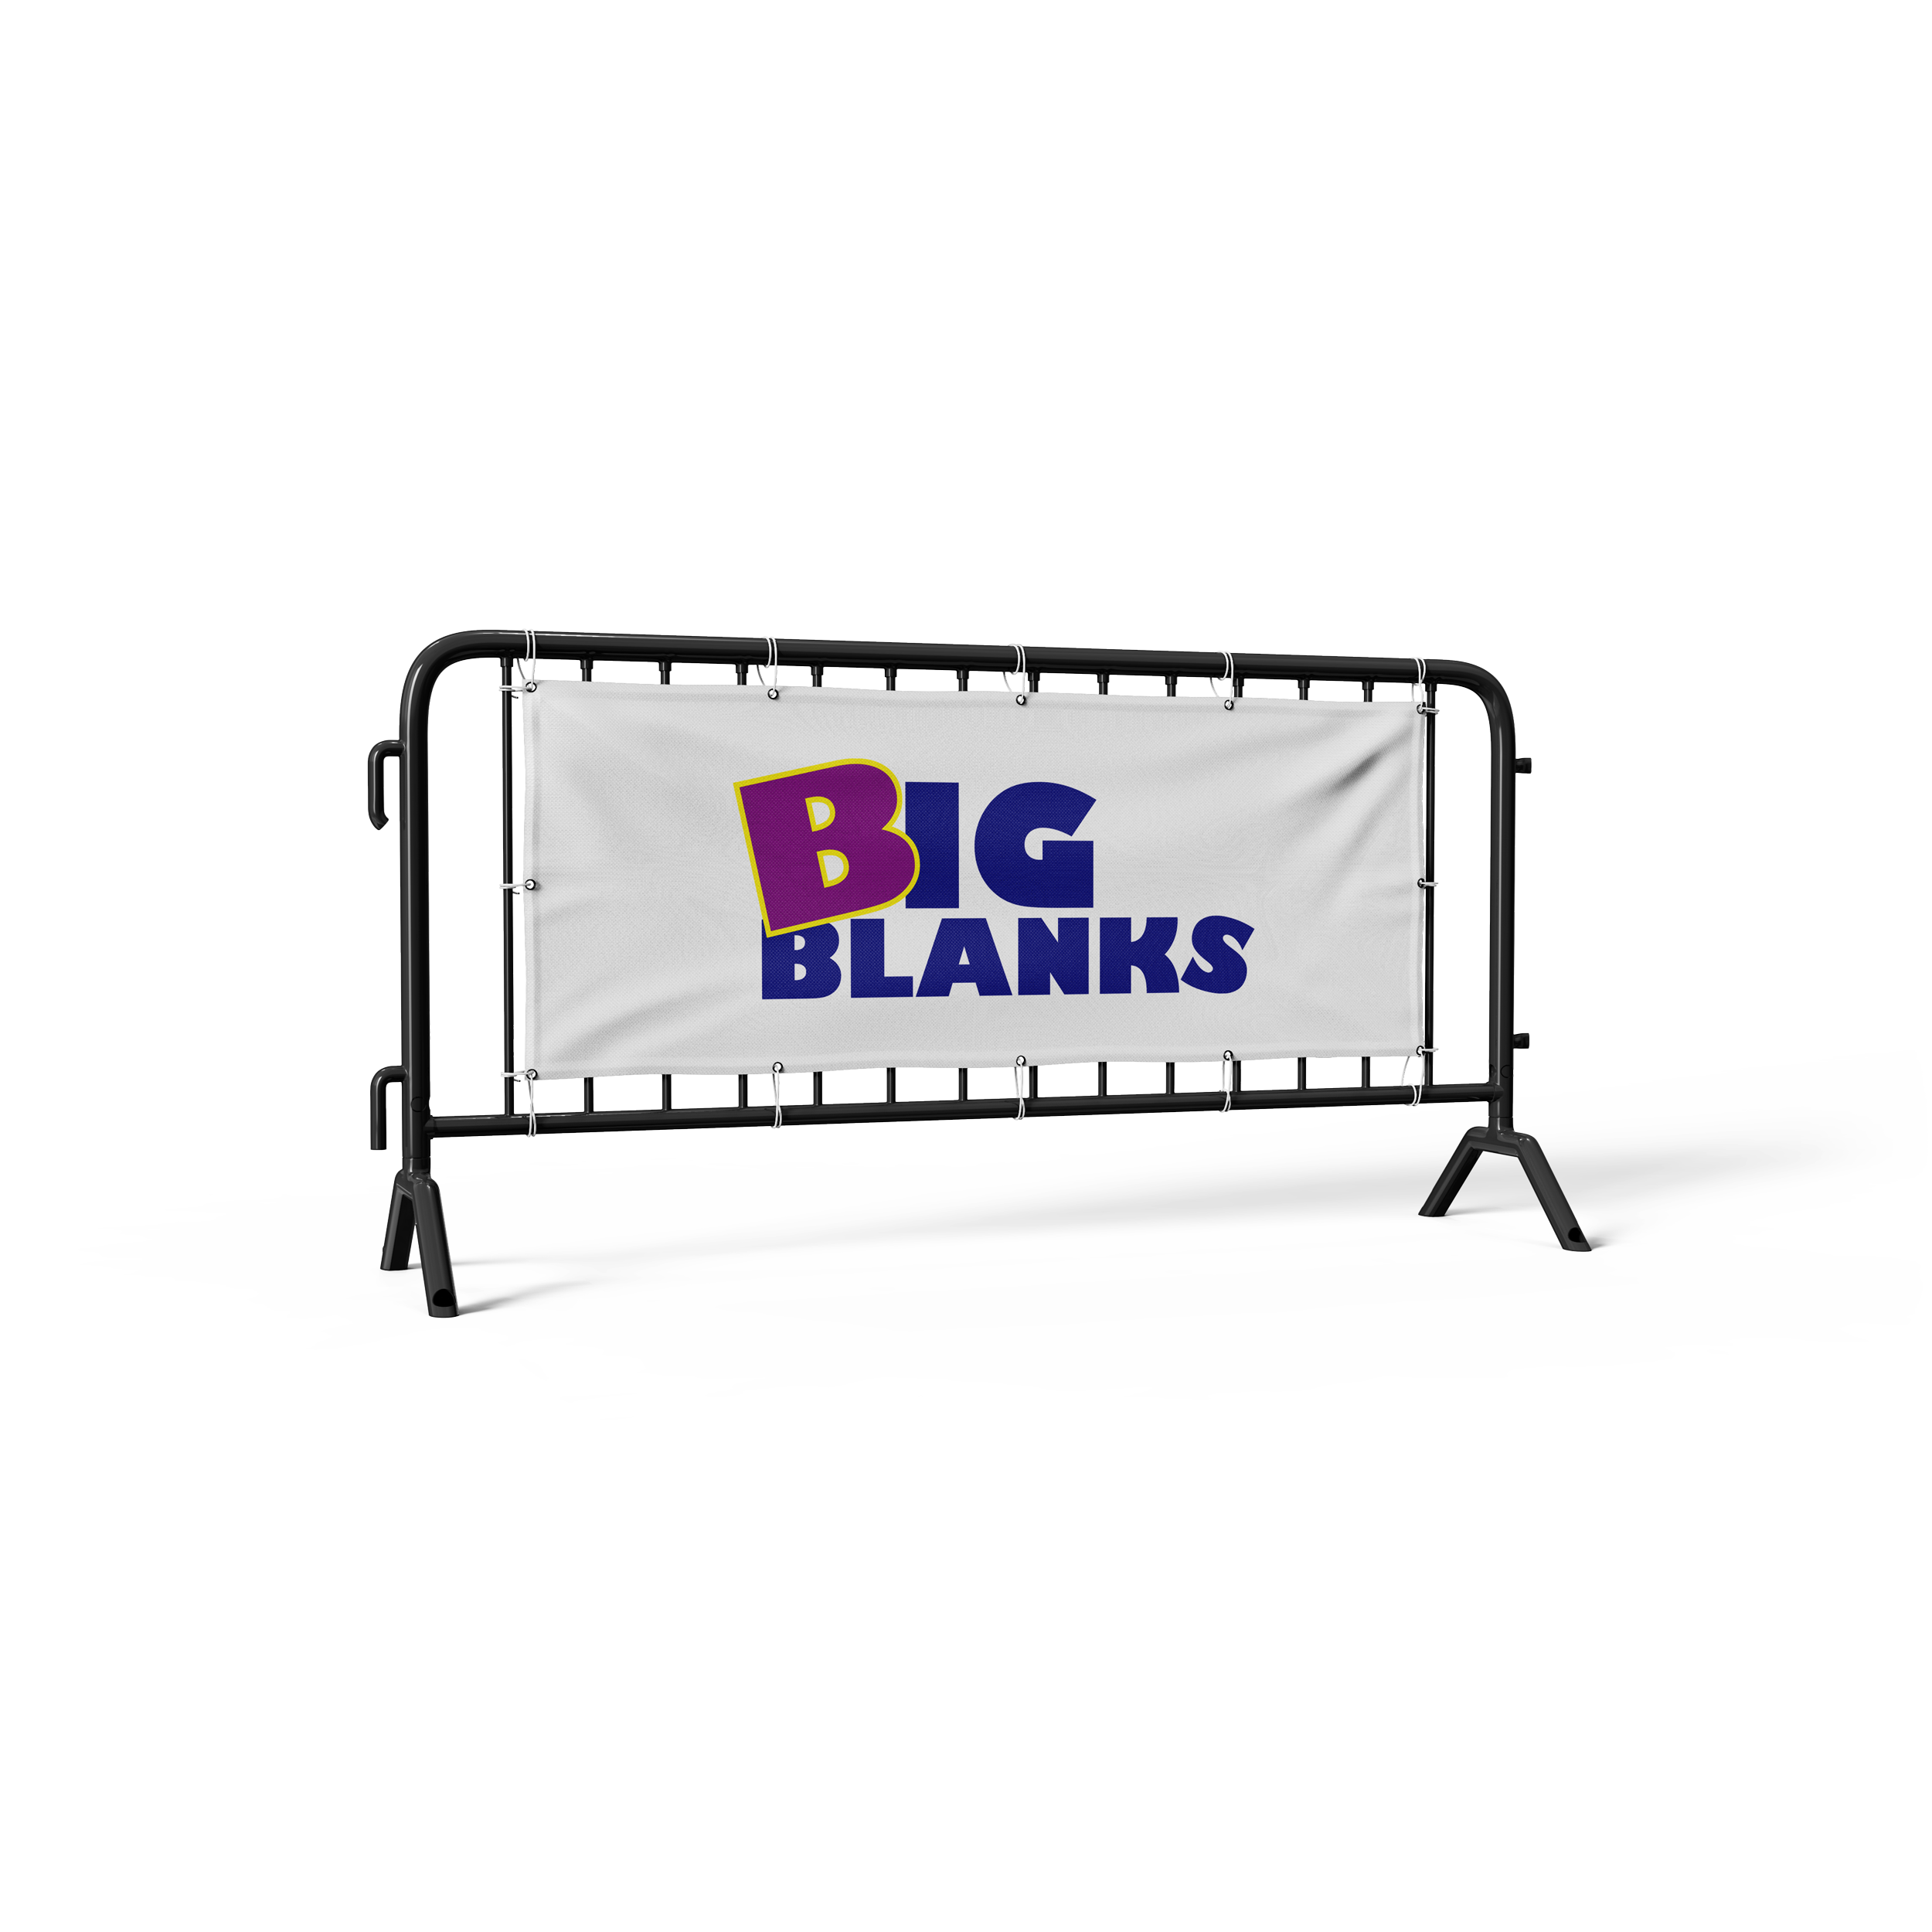 BigBlanks: Custom Banners